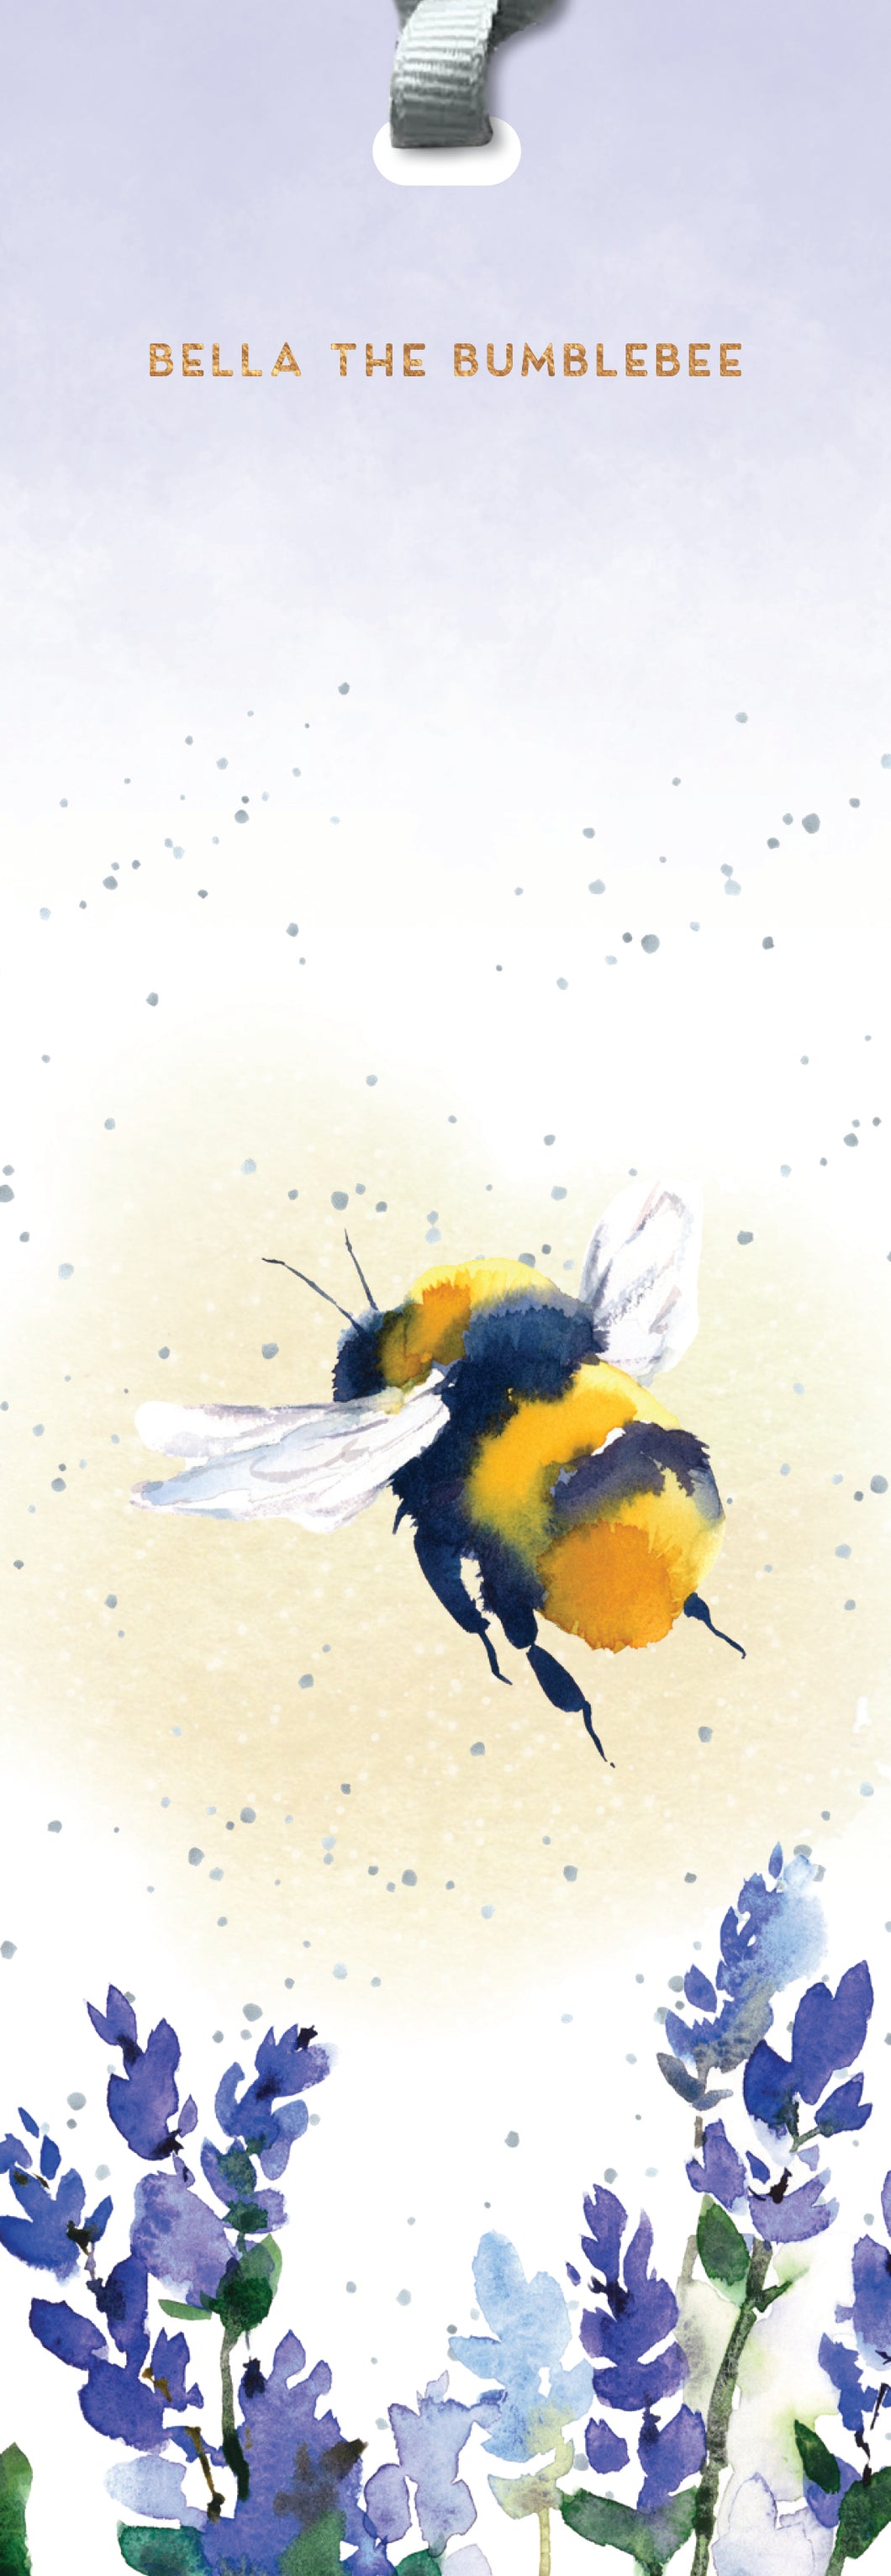 Hopper Studios Bookmark - Bella the Bumblebee